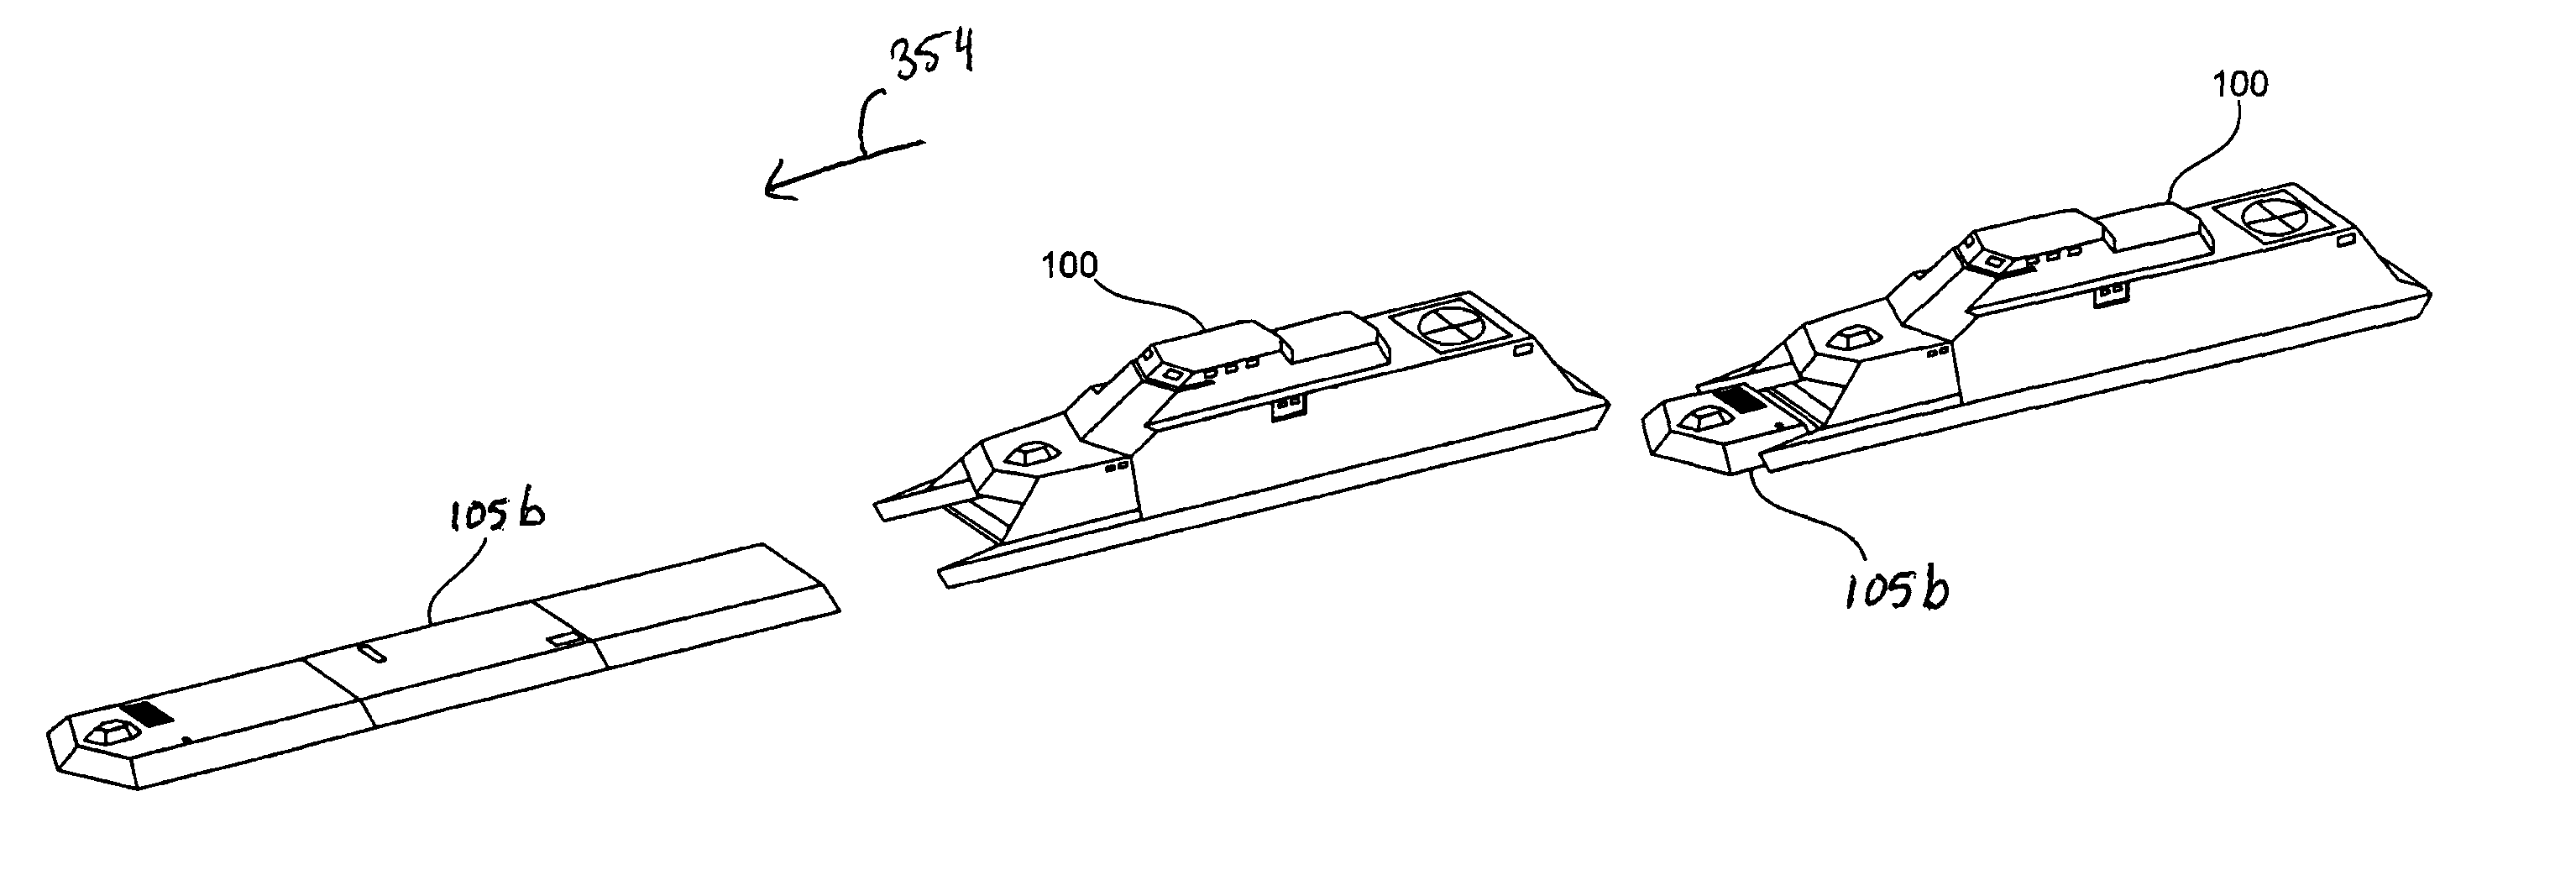 Mission module ship design